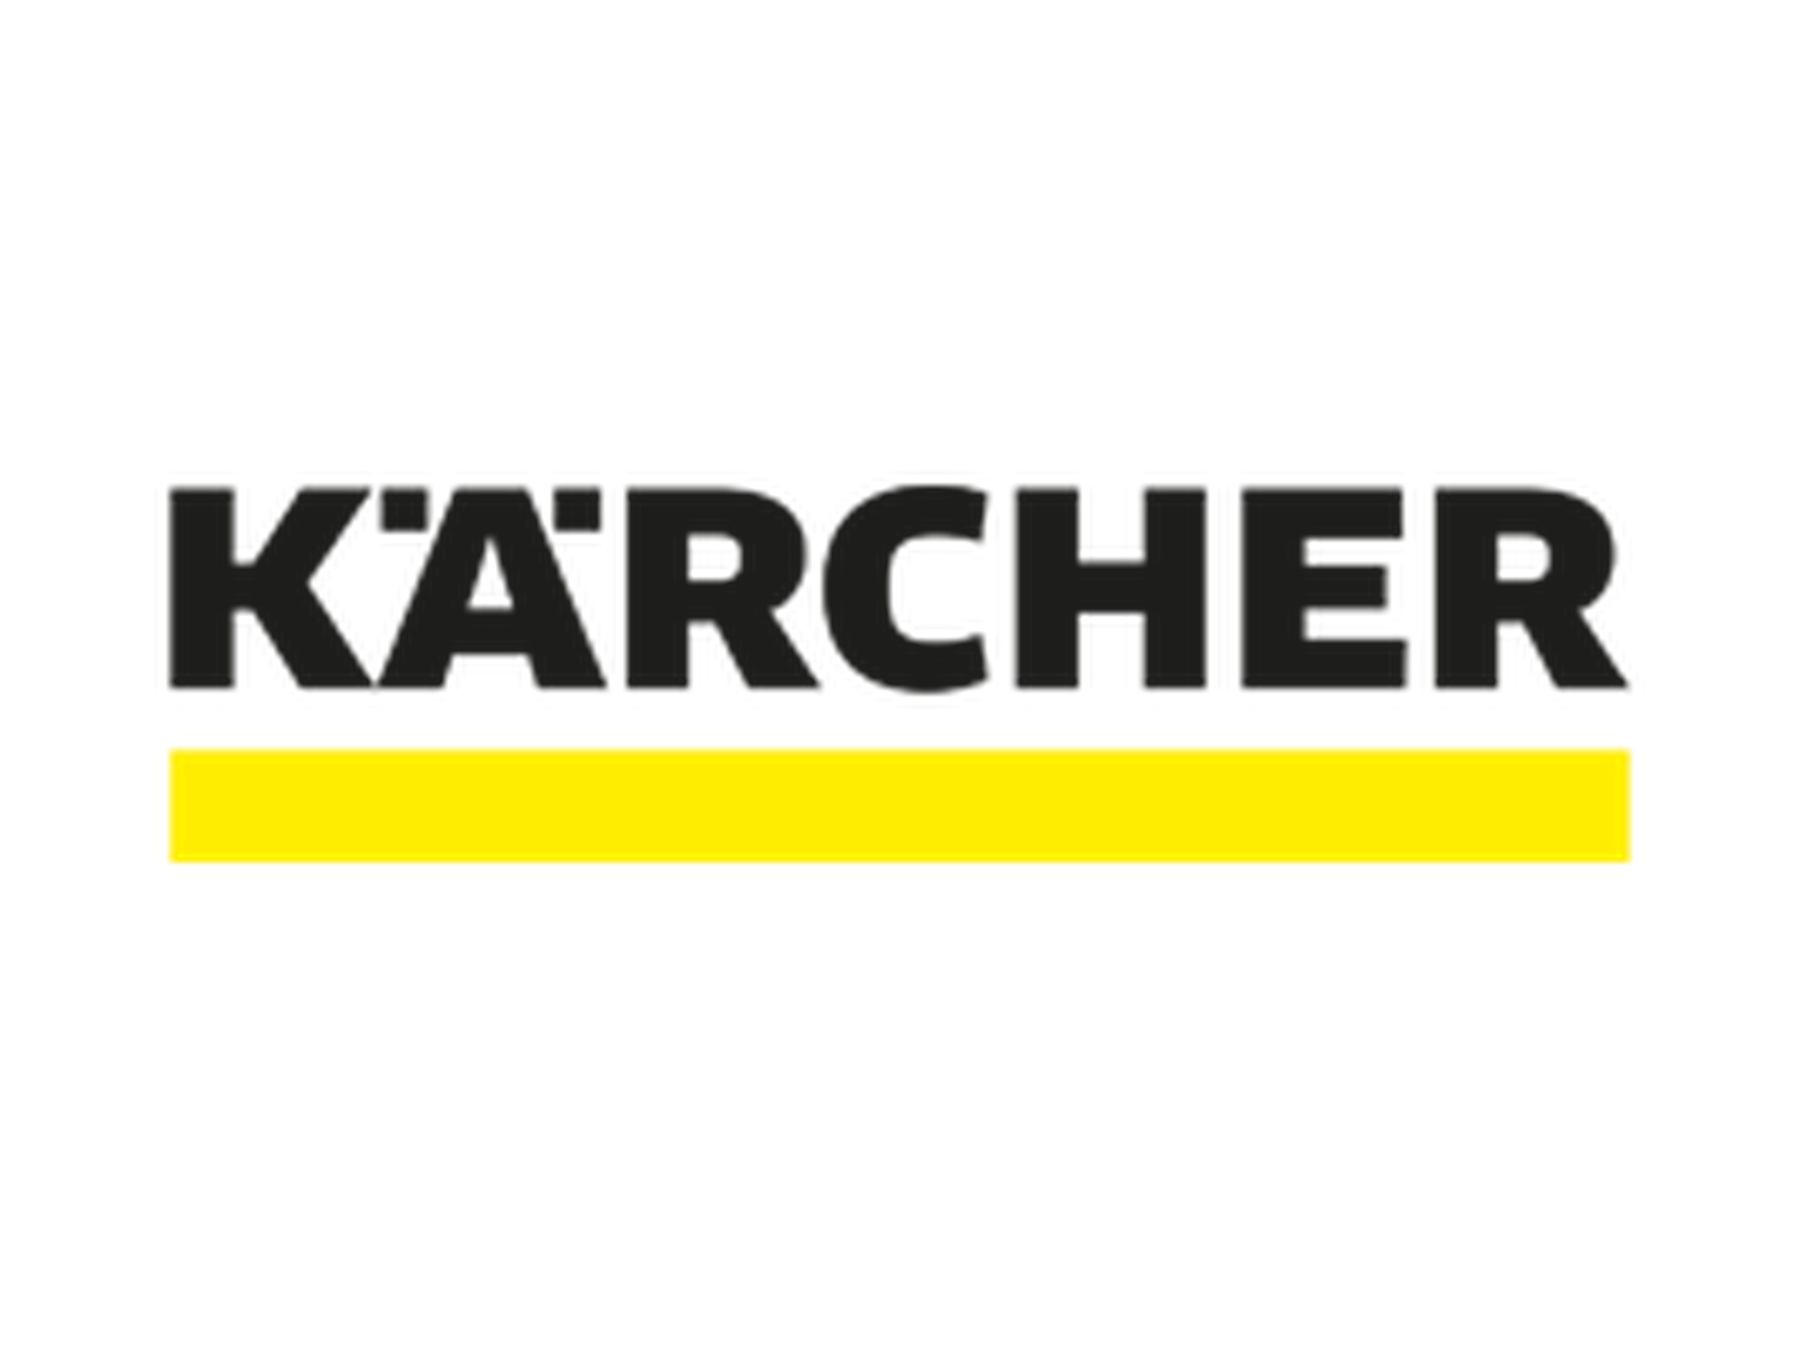 Karcher discount code